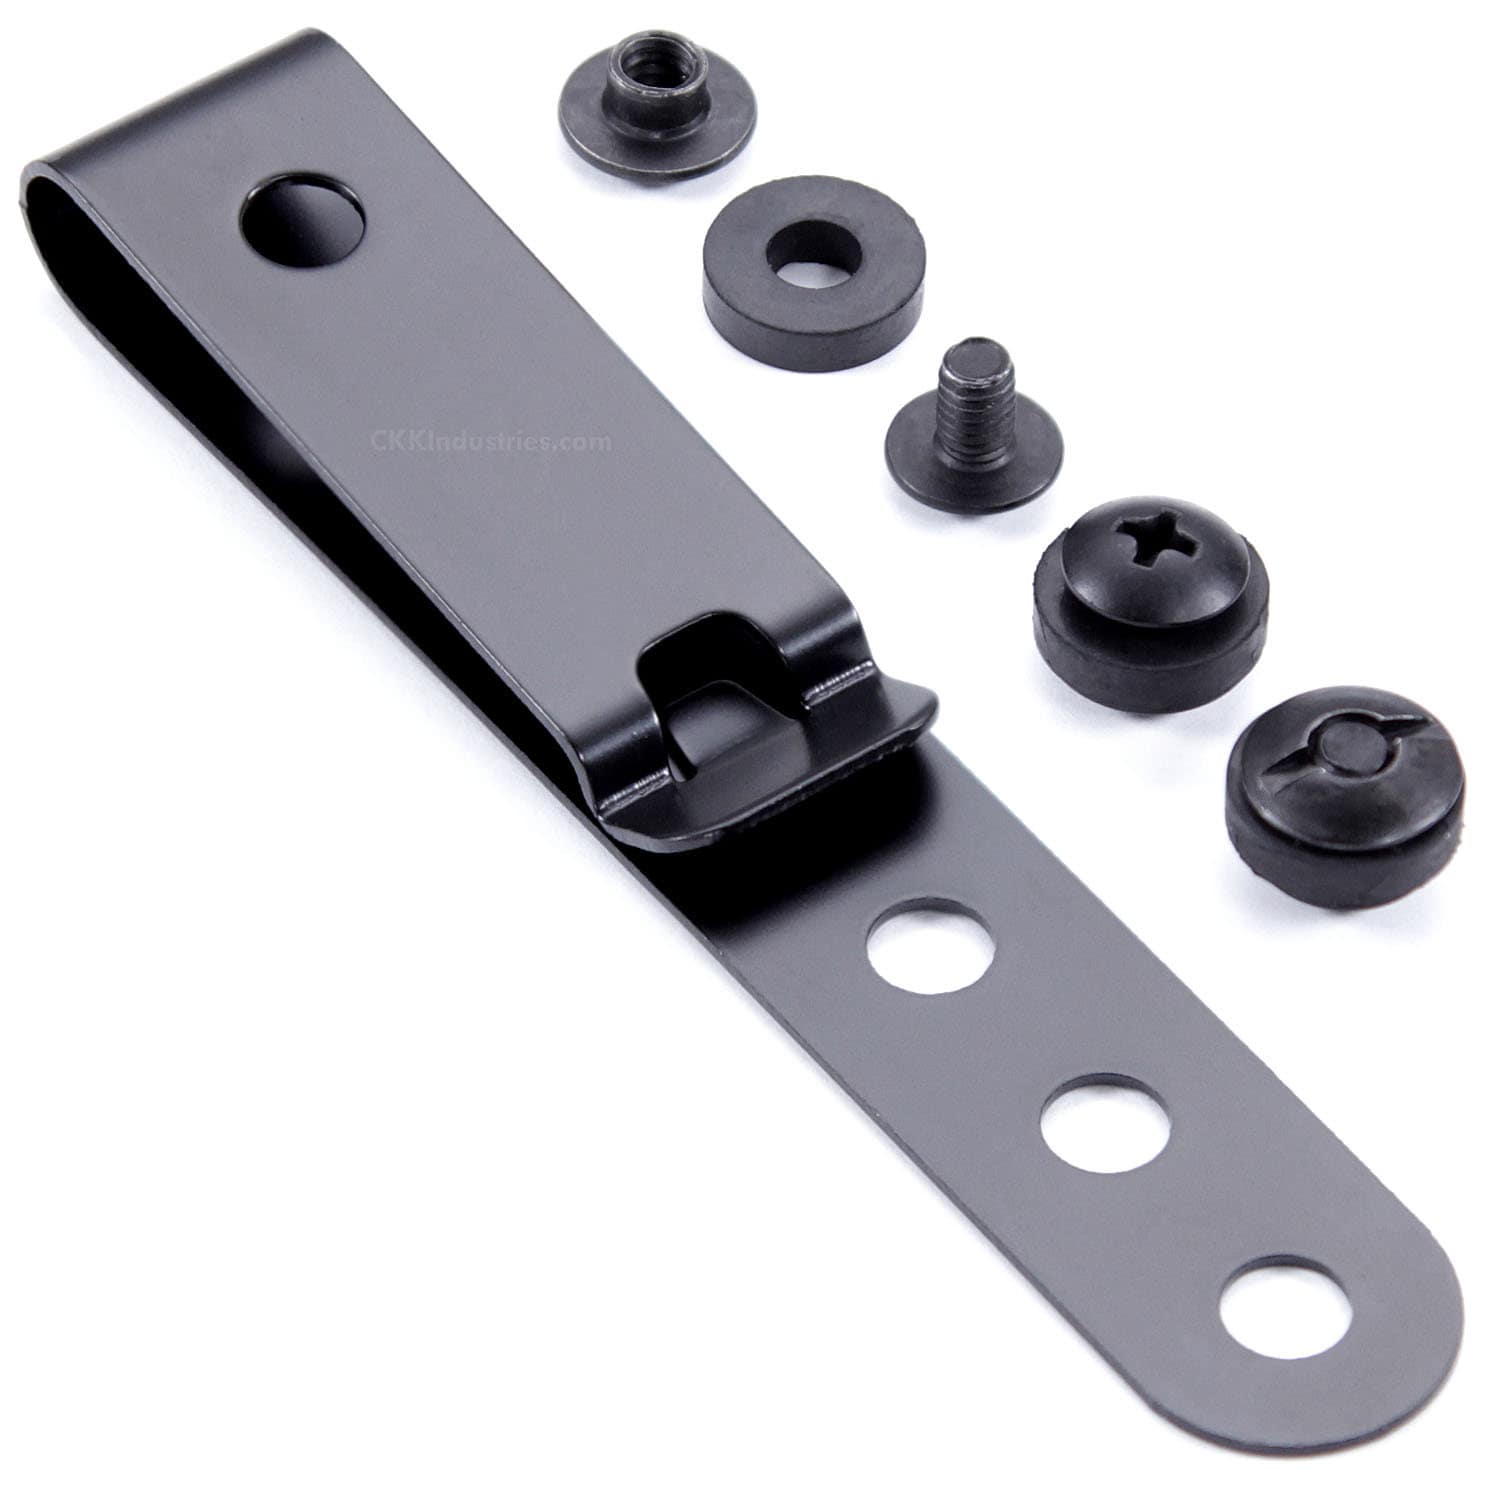 Universal Metal Belt Clip for Holsters/sheaths model 5 3-hole tactical  Black select Quantity Below select Hardware Below 